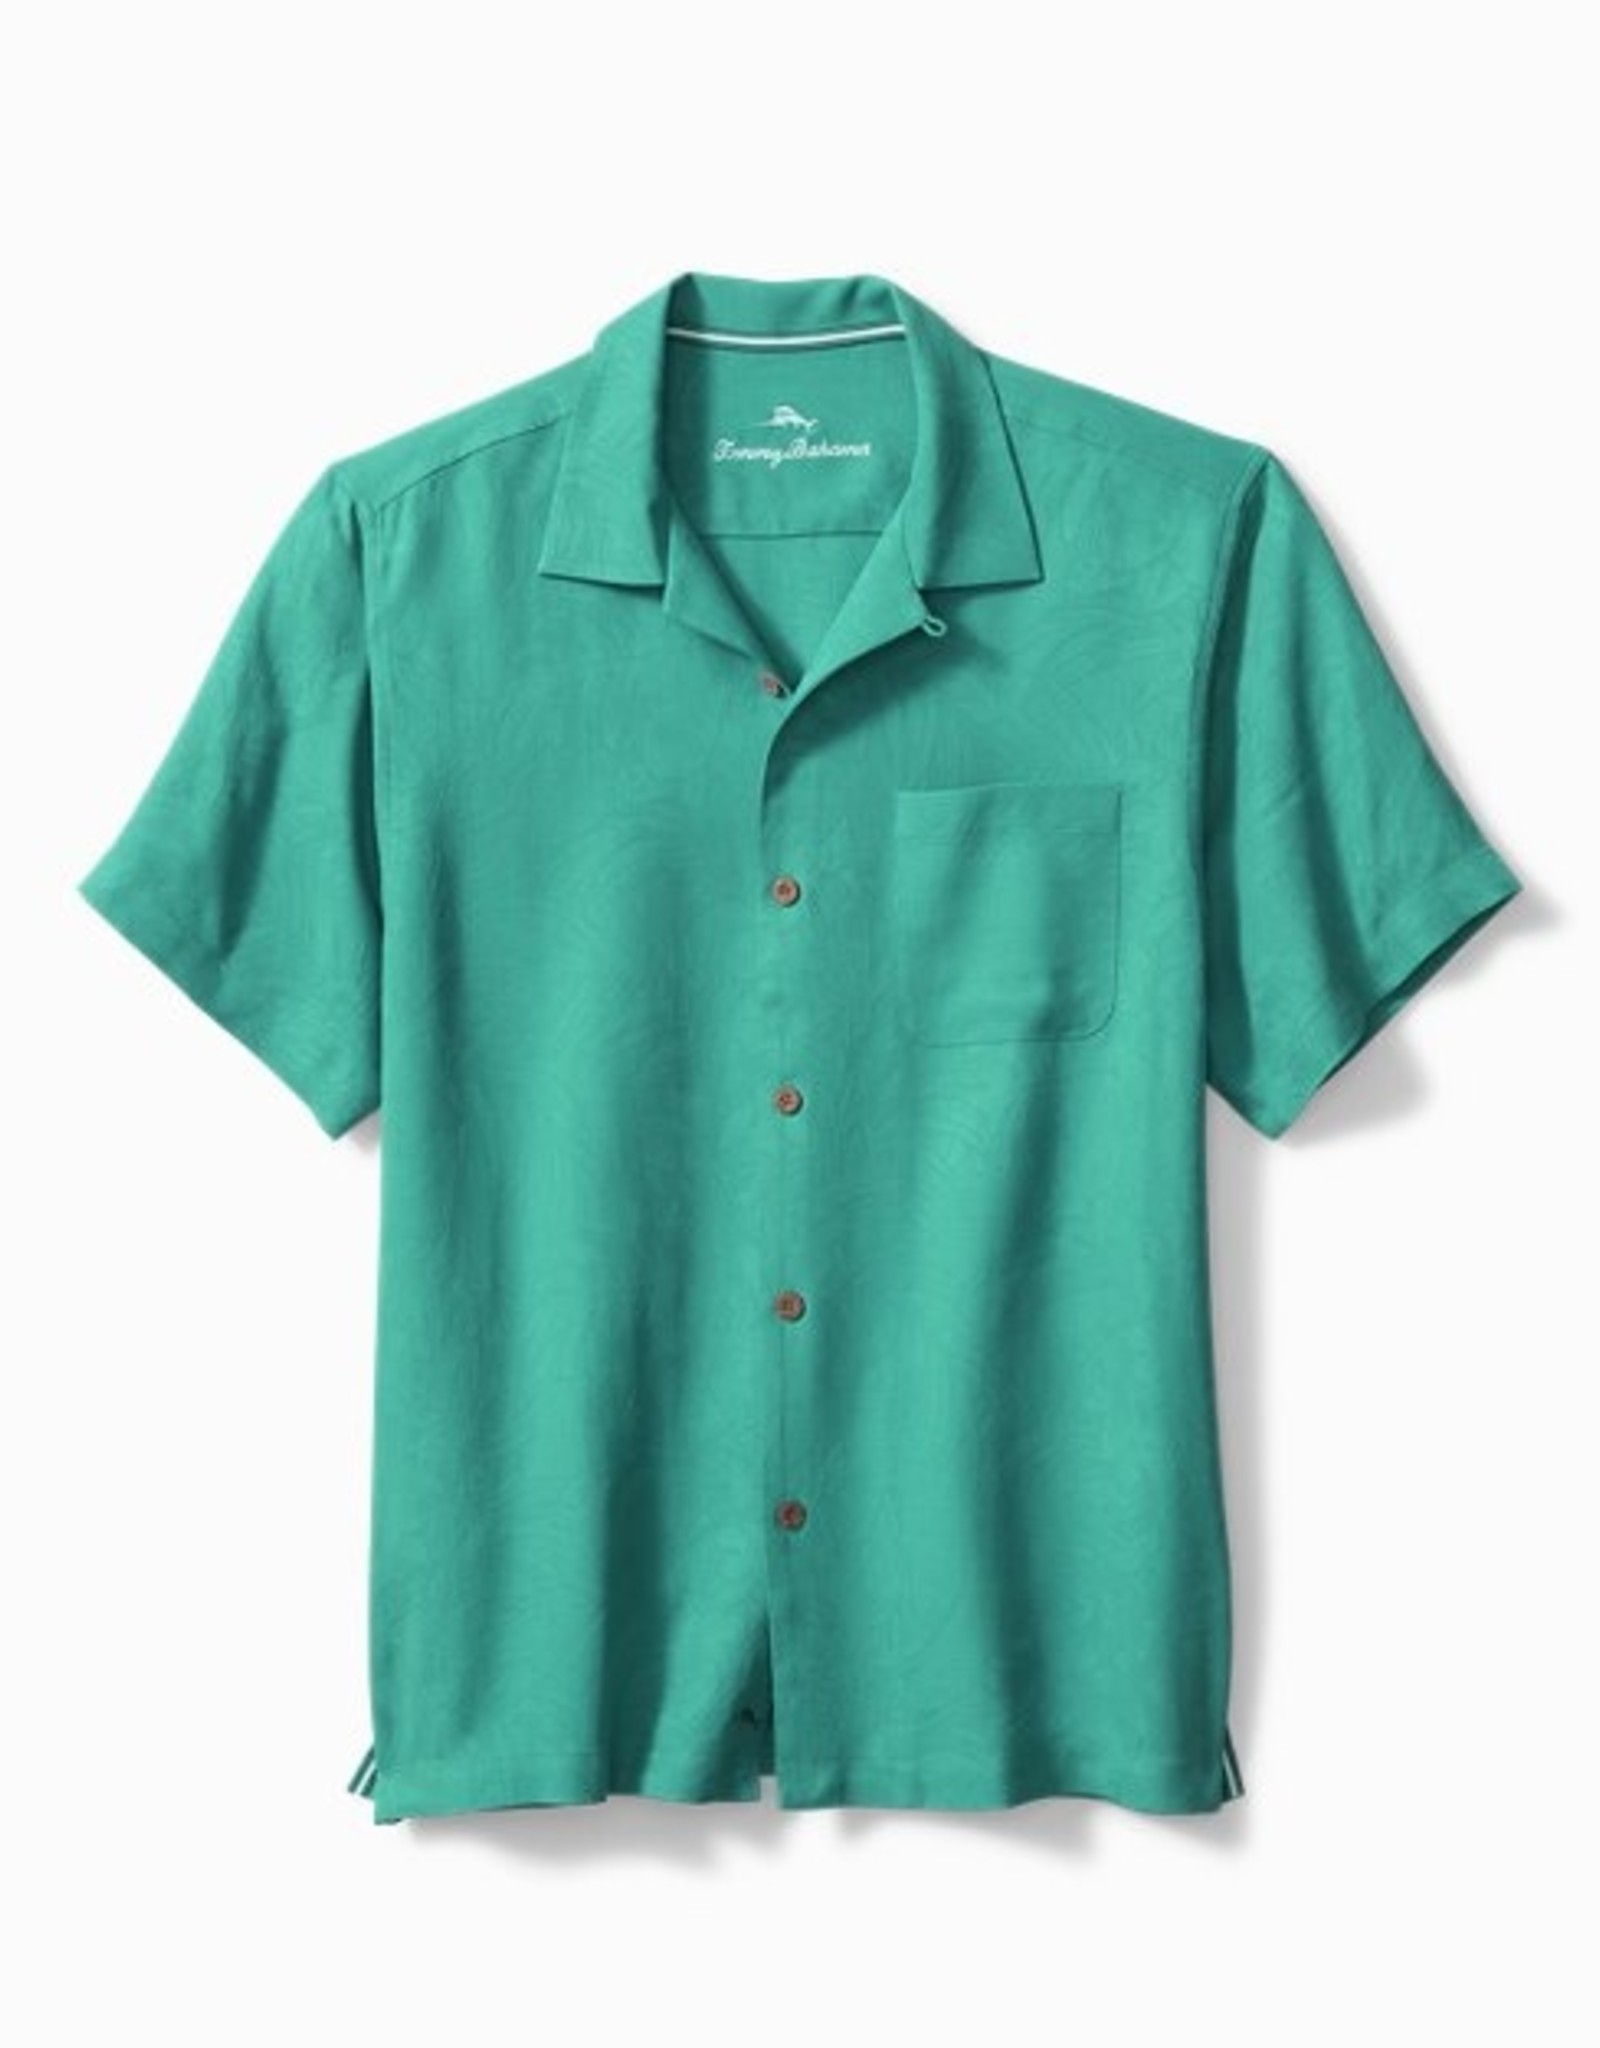 Tommy Bahama Tropic Isle Shirt